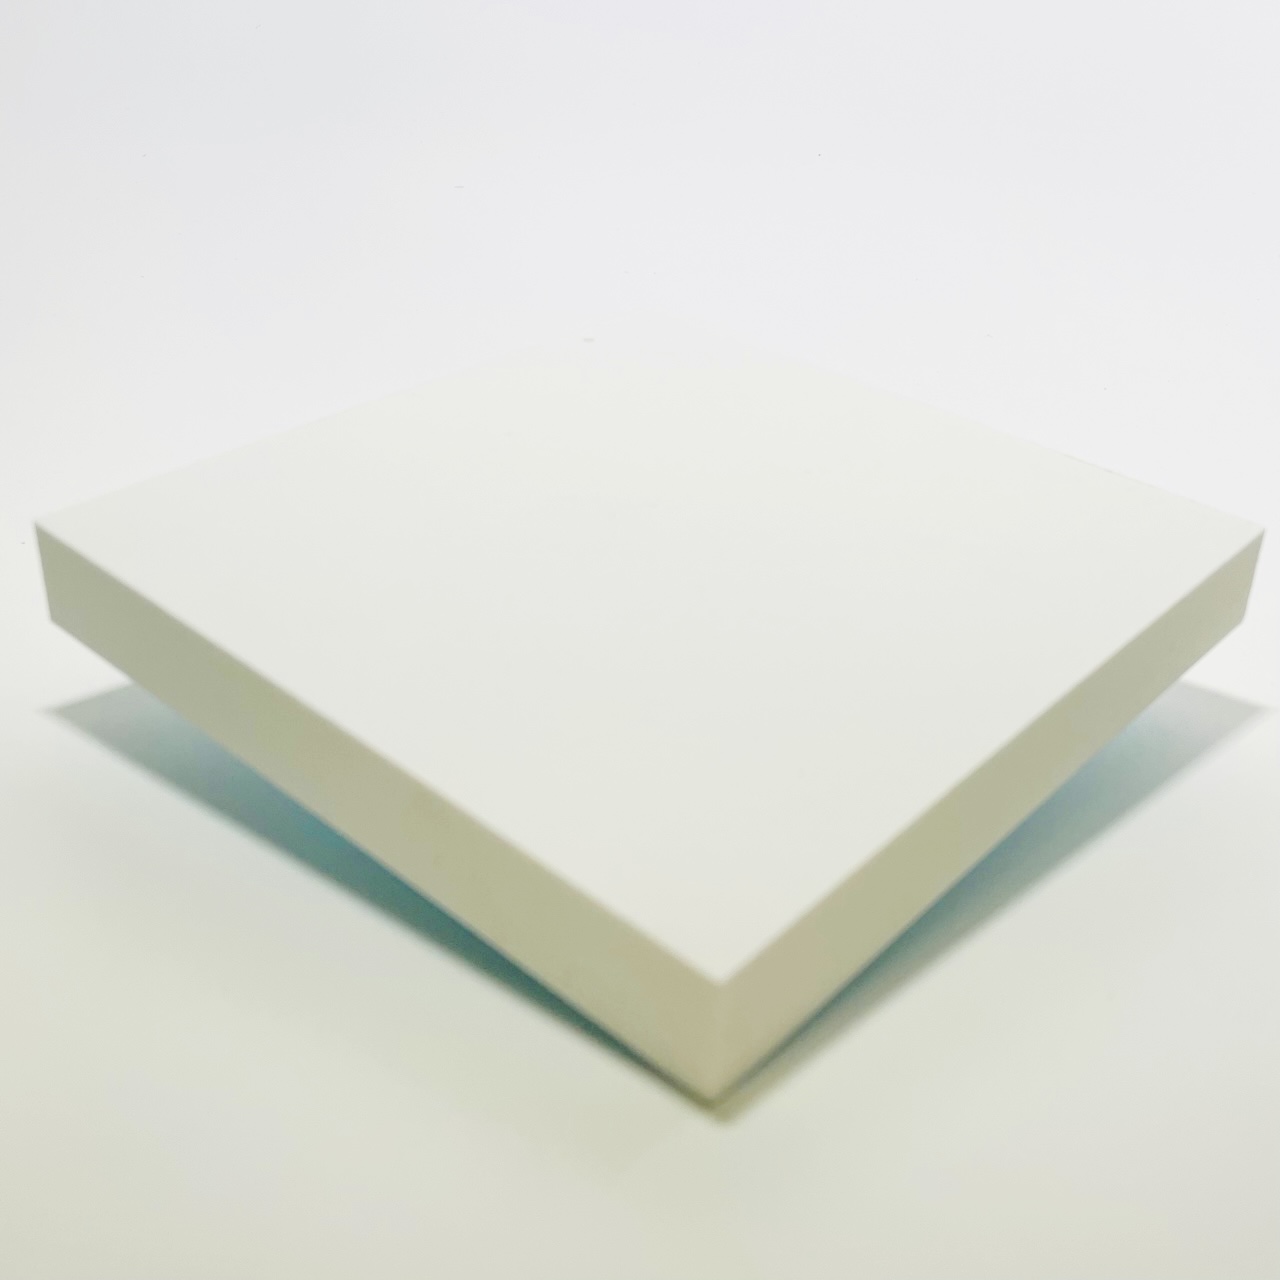 Pannello Lastra Forex pvc bianco spessore 3 mm 50x50 cm bianco